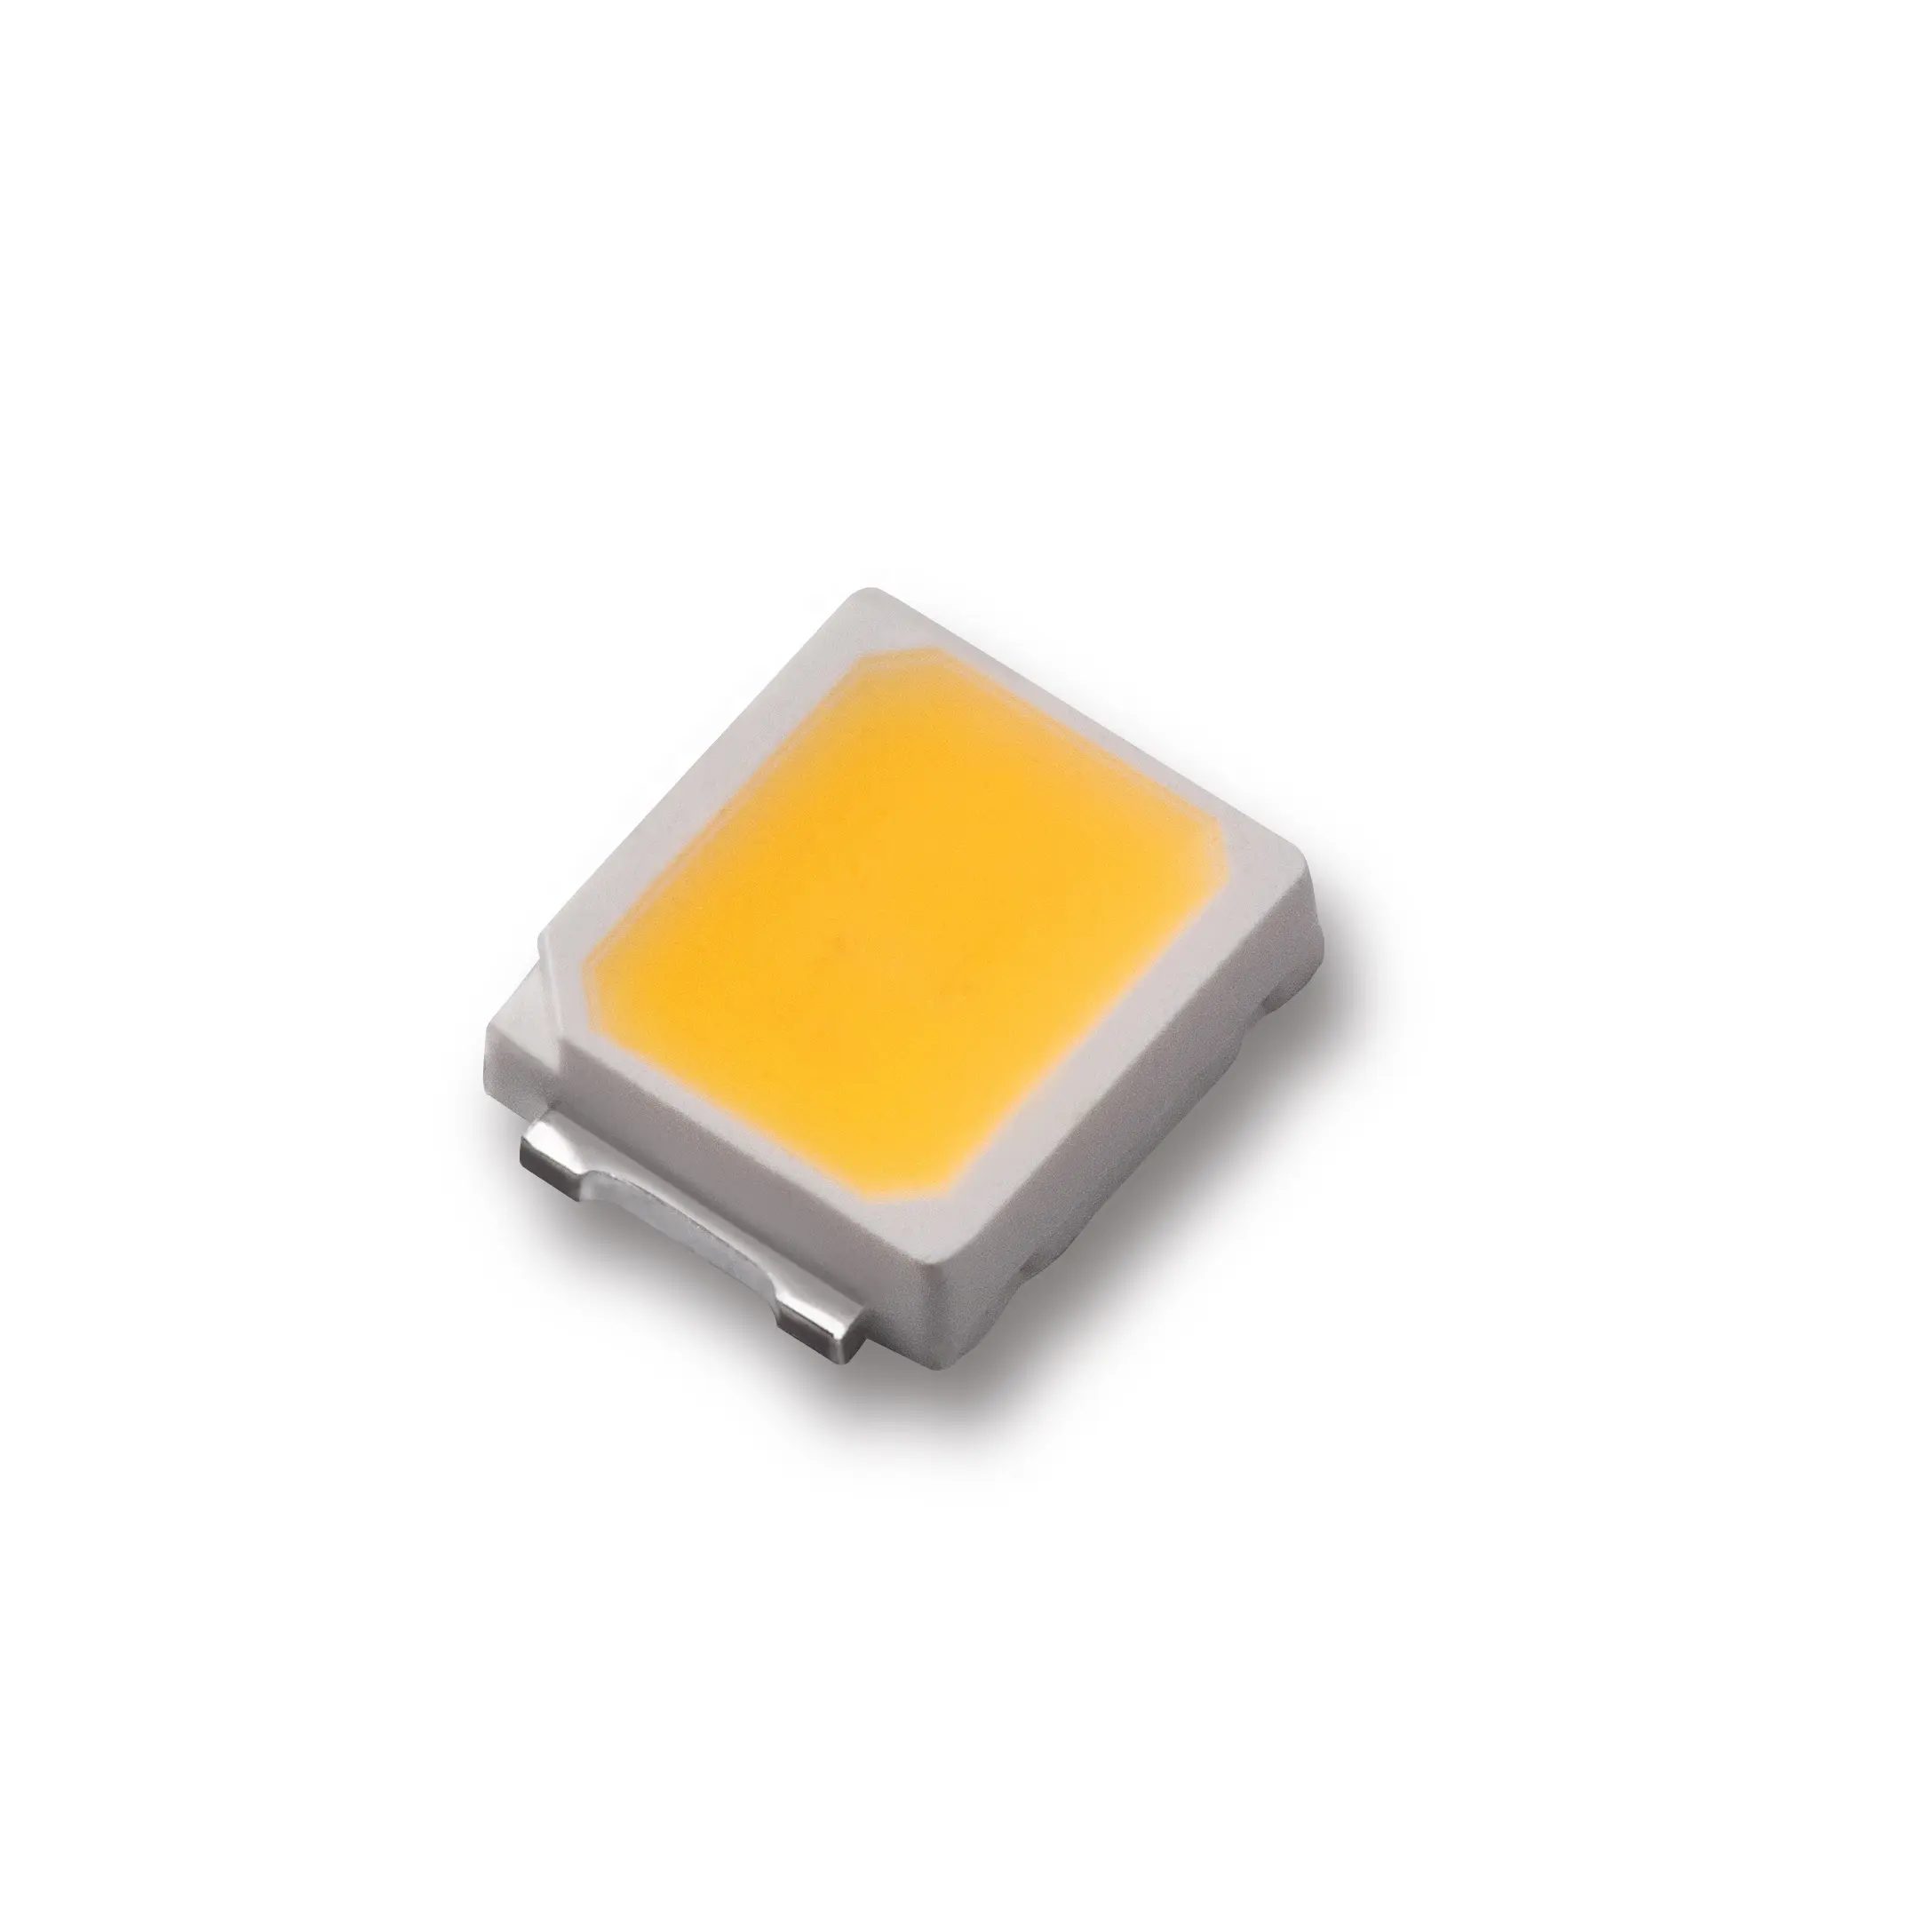 2835 smd led warm white diode 0.5w 3v specifications rigida datenblatt sanan chip high voltage smd 2835 led